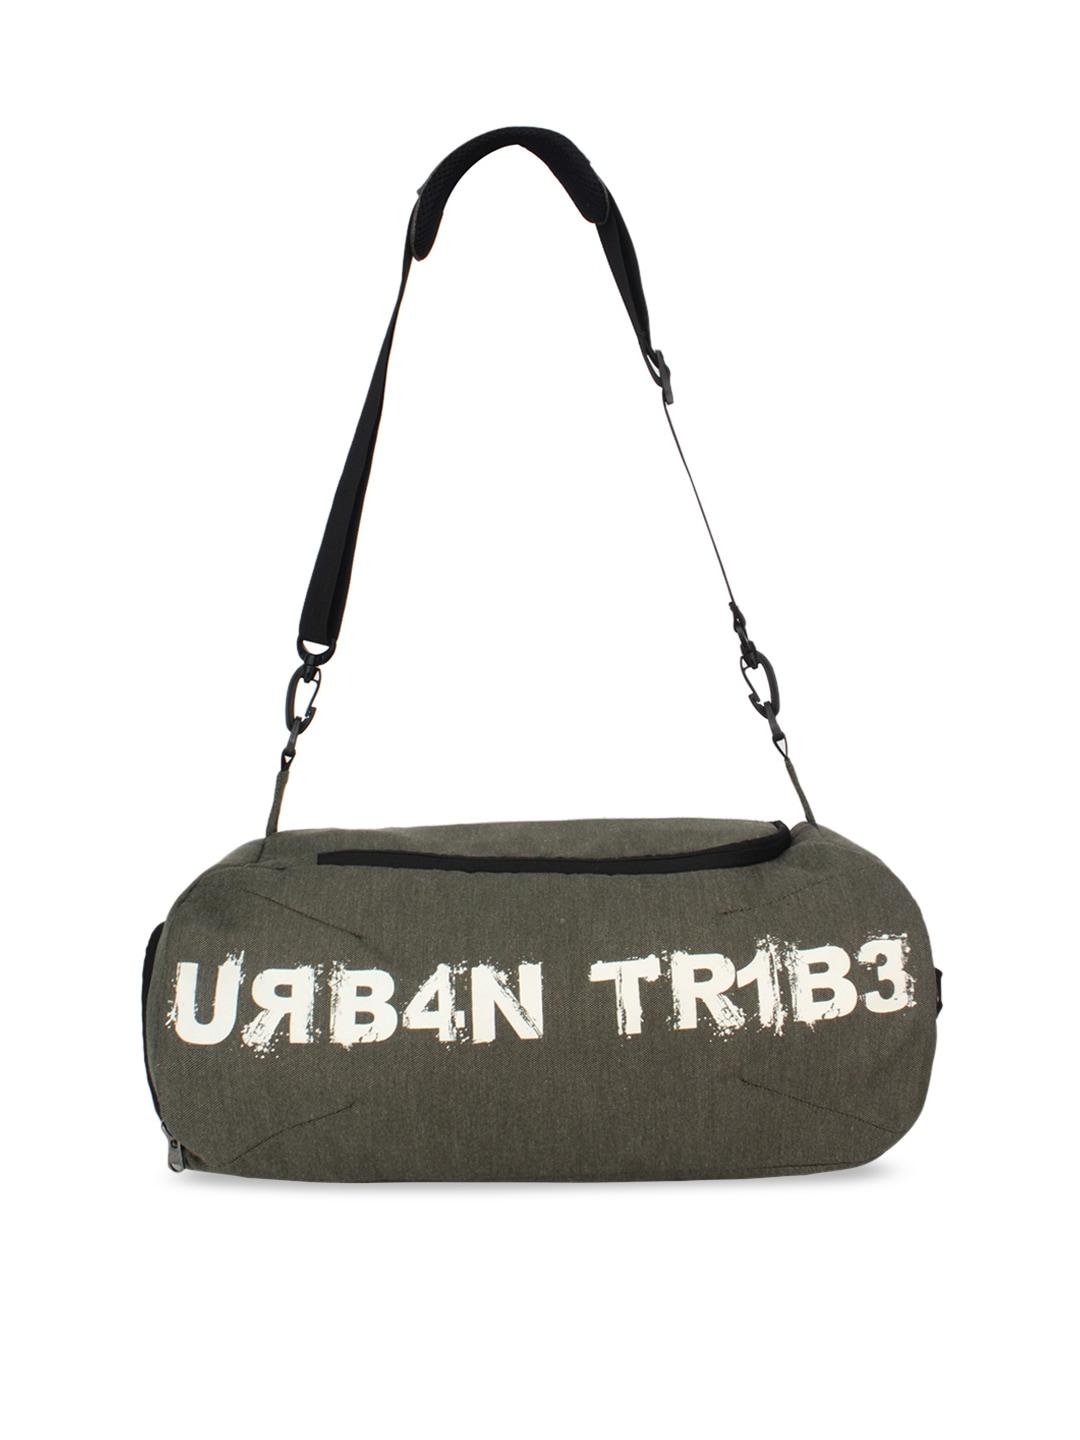 urban tribe unisex olive green duffle bag